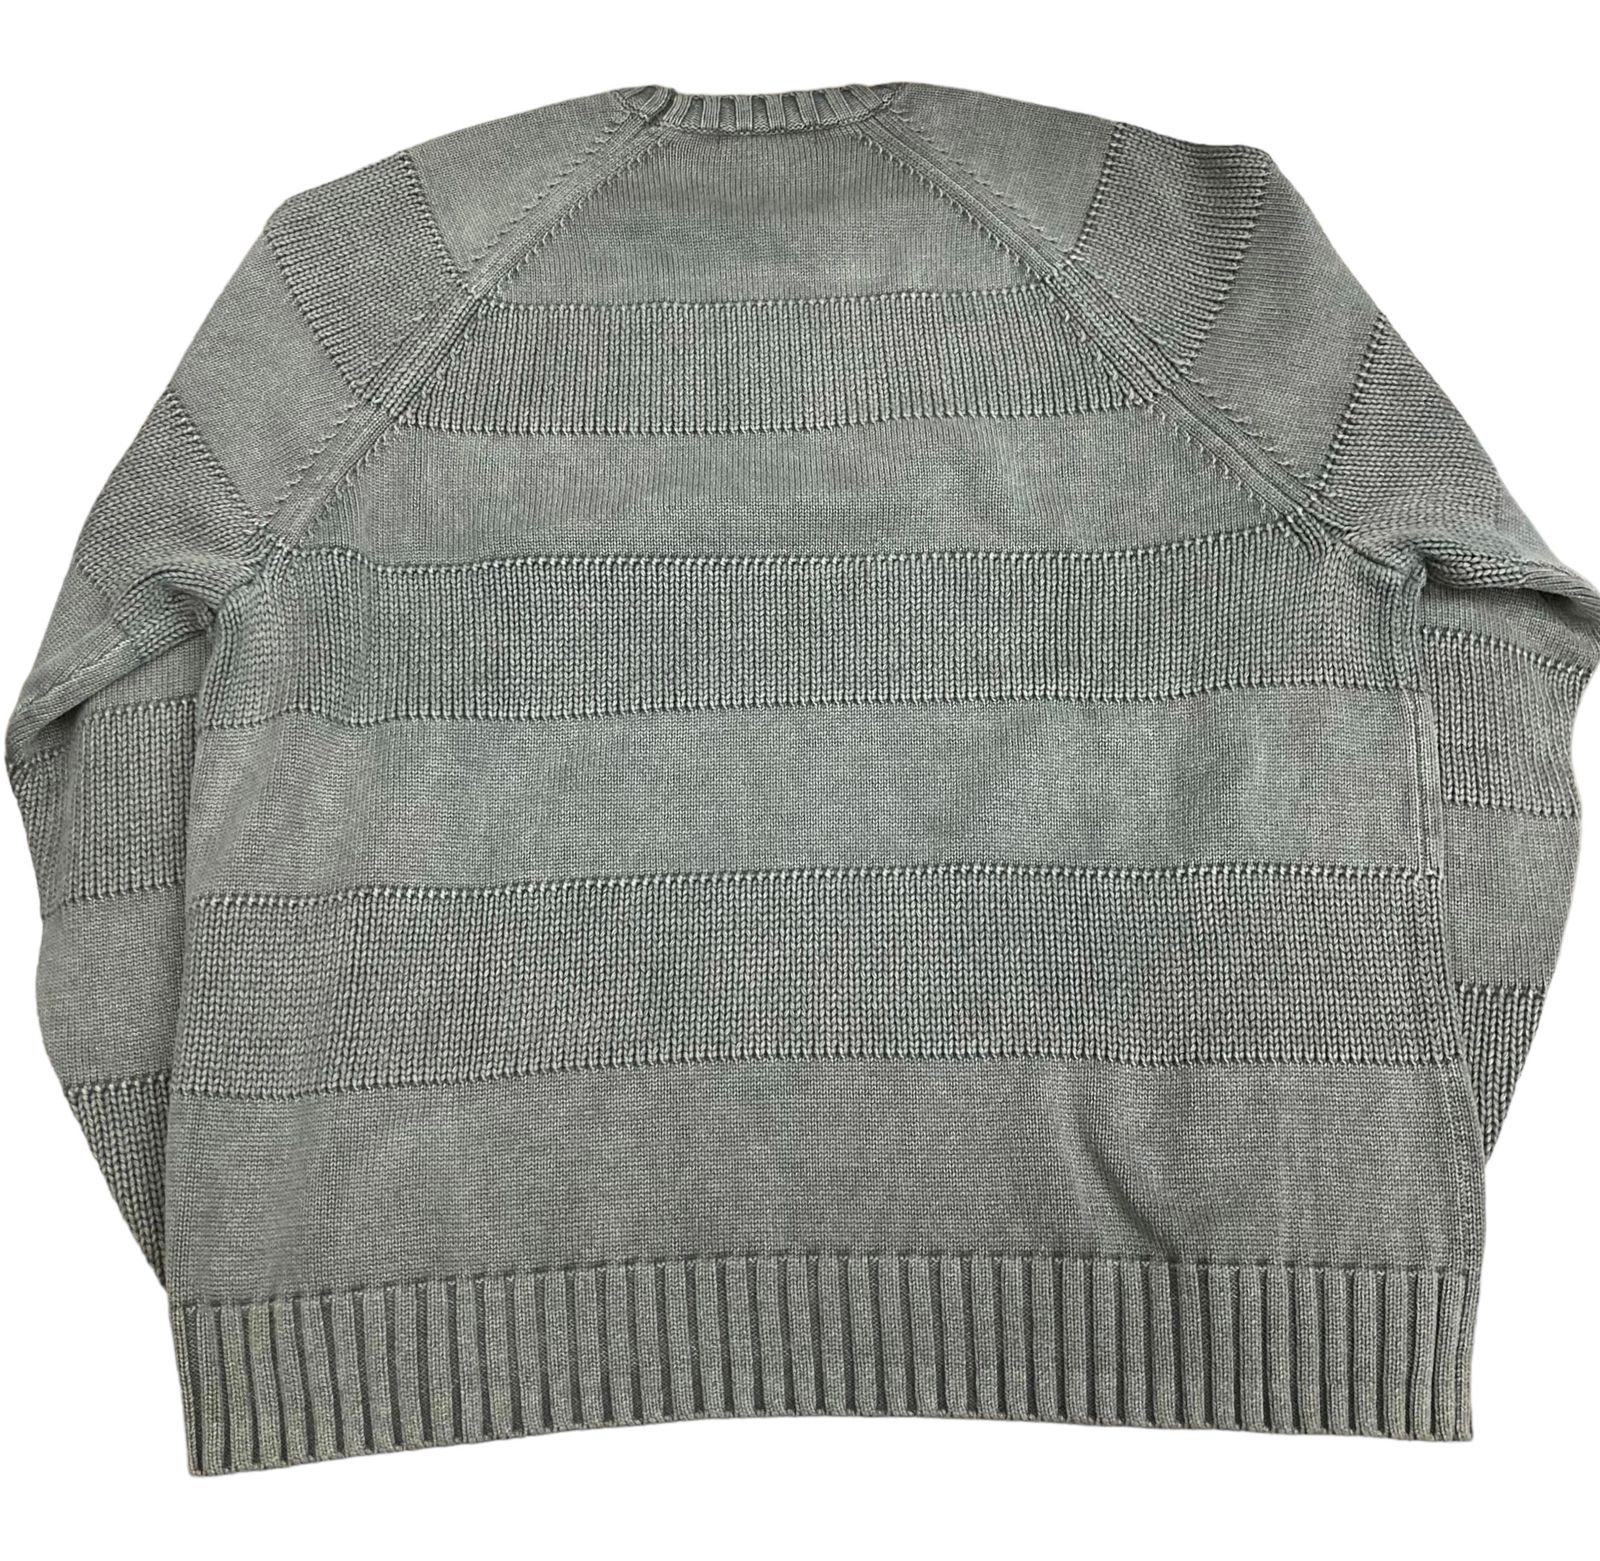 Supreme 13FW Wide Pinstripe Sweater S